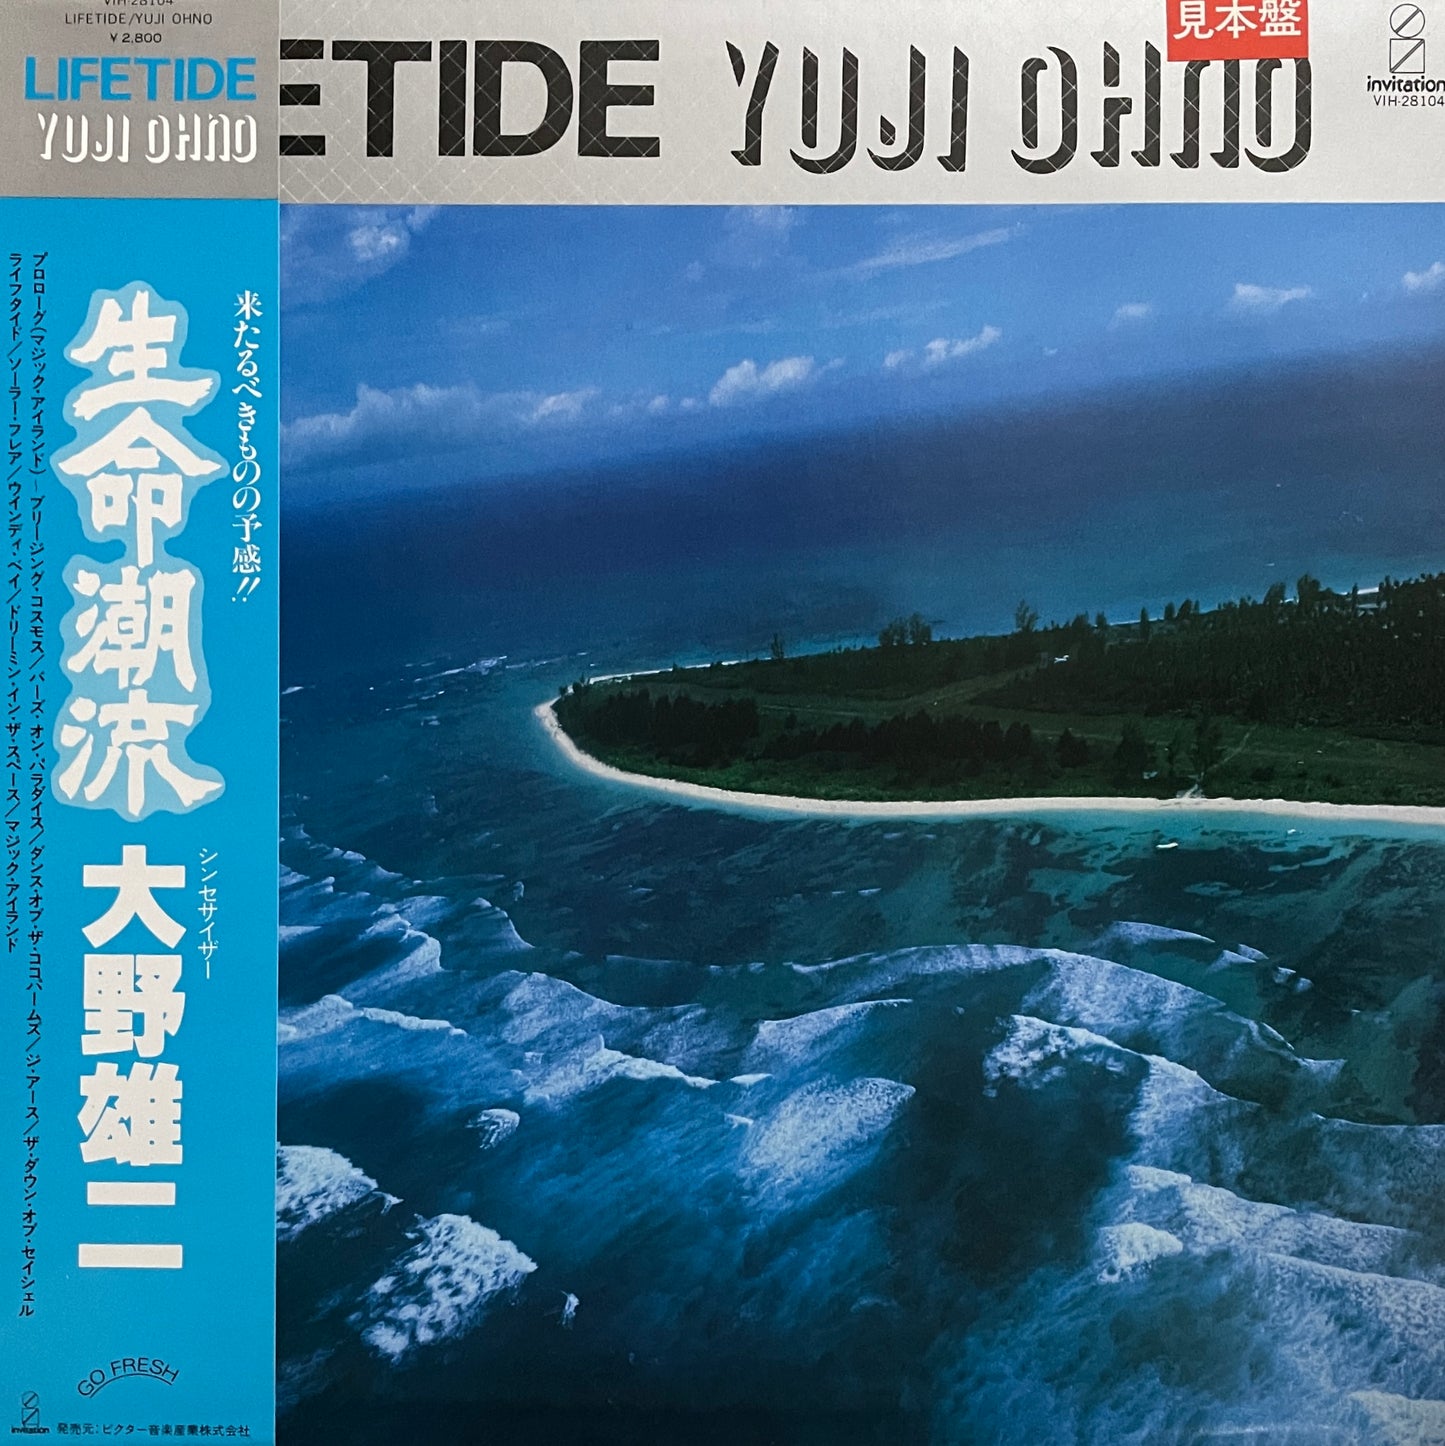 Yuji Ohno "Leftide" (1982)